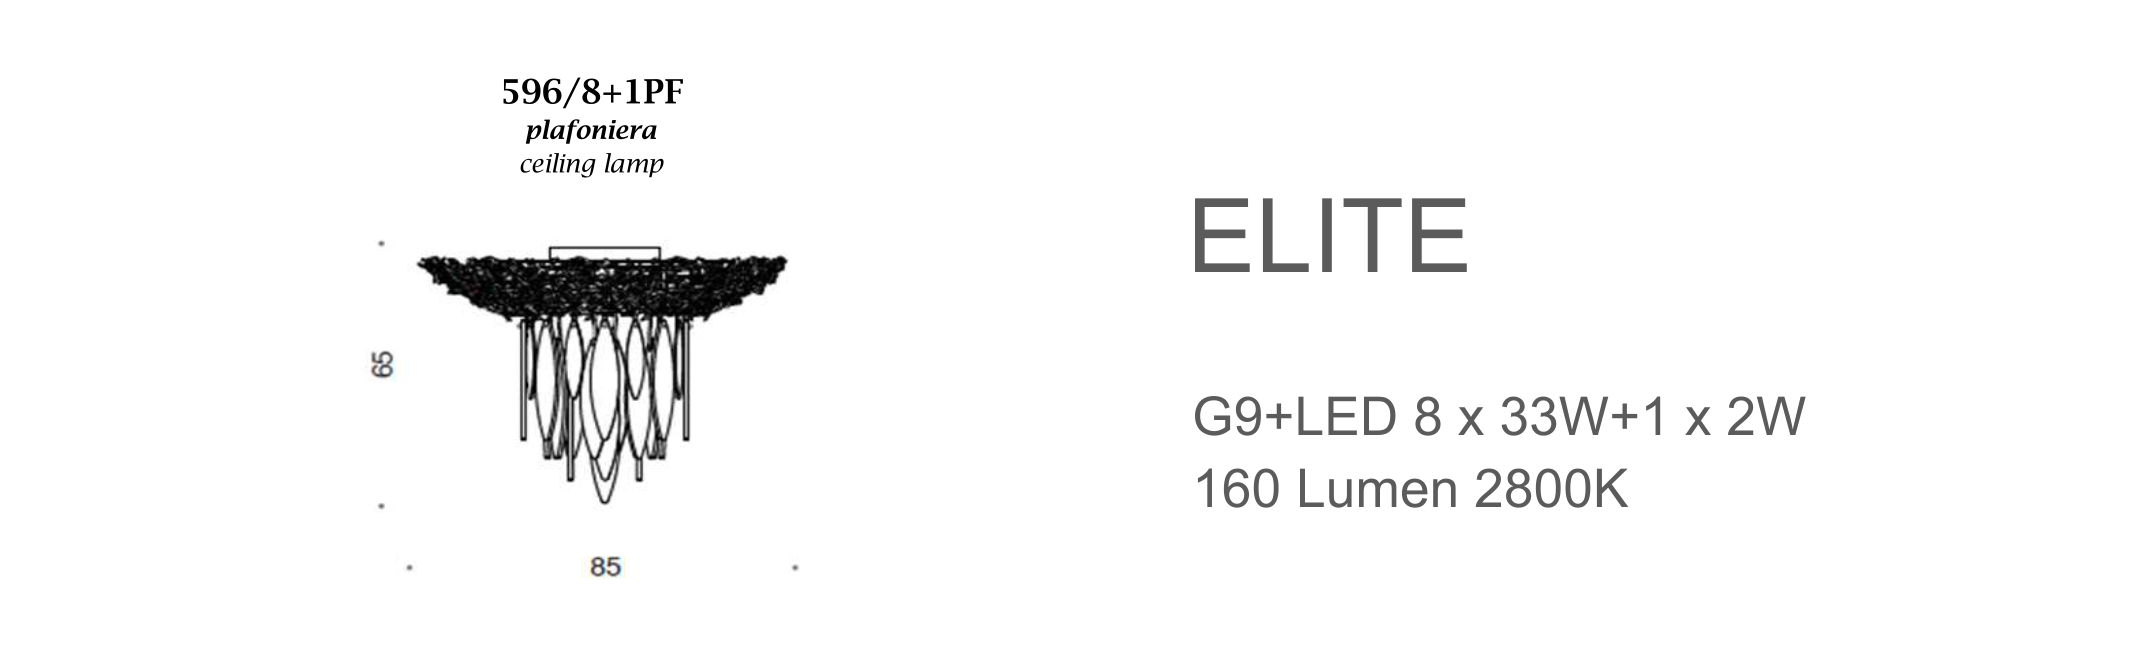 Elite 596/8+1PF